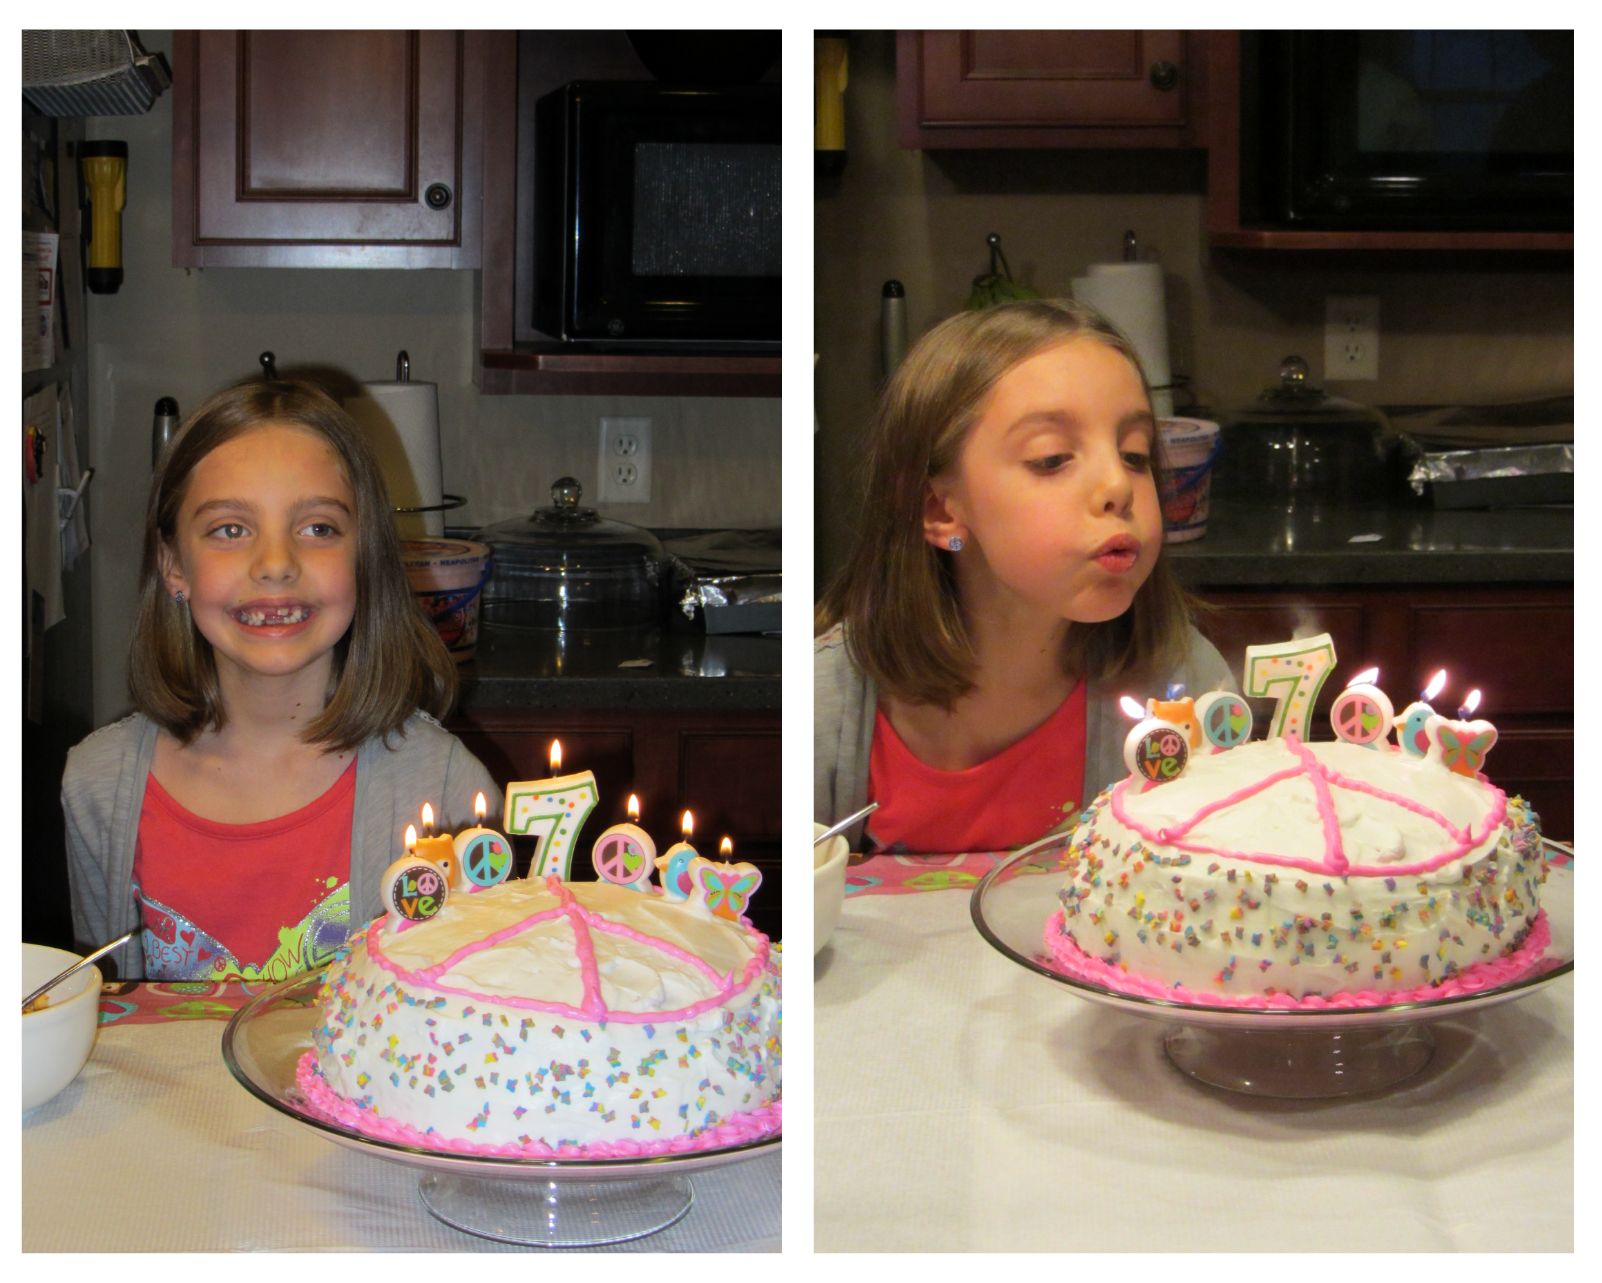 Gracie and cake